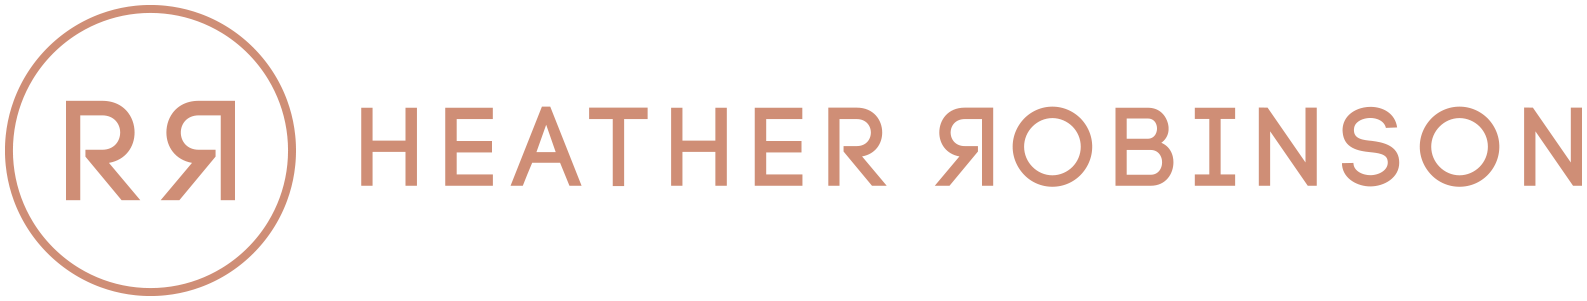 logo for Heather Robinson Ltd